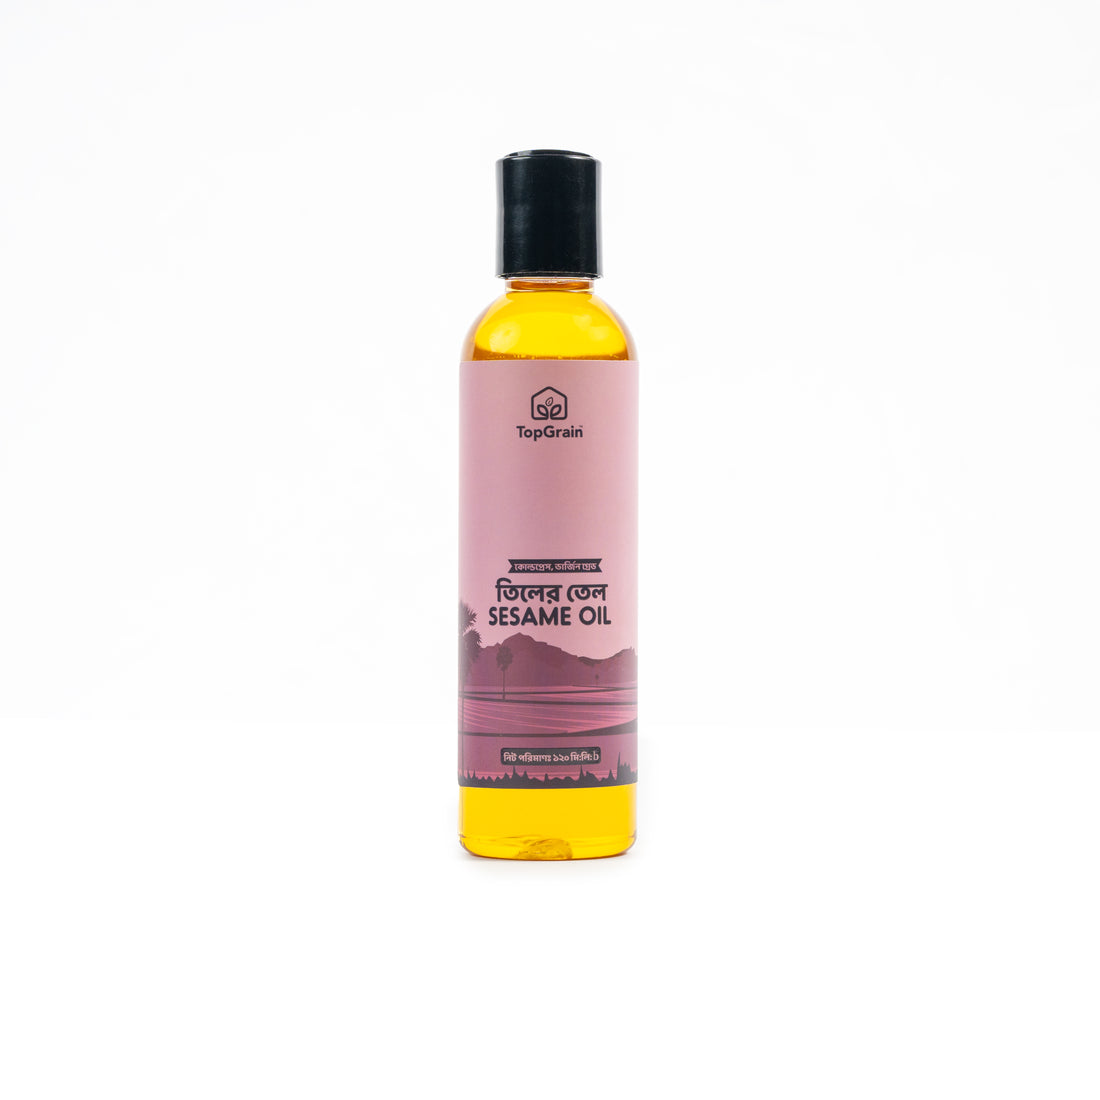 TopGrain Sesame Oil for Hair and Skin (120ml)